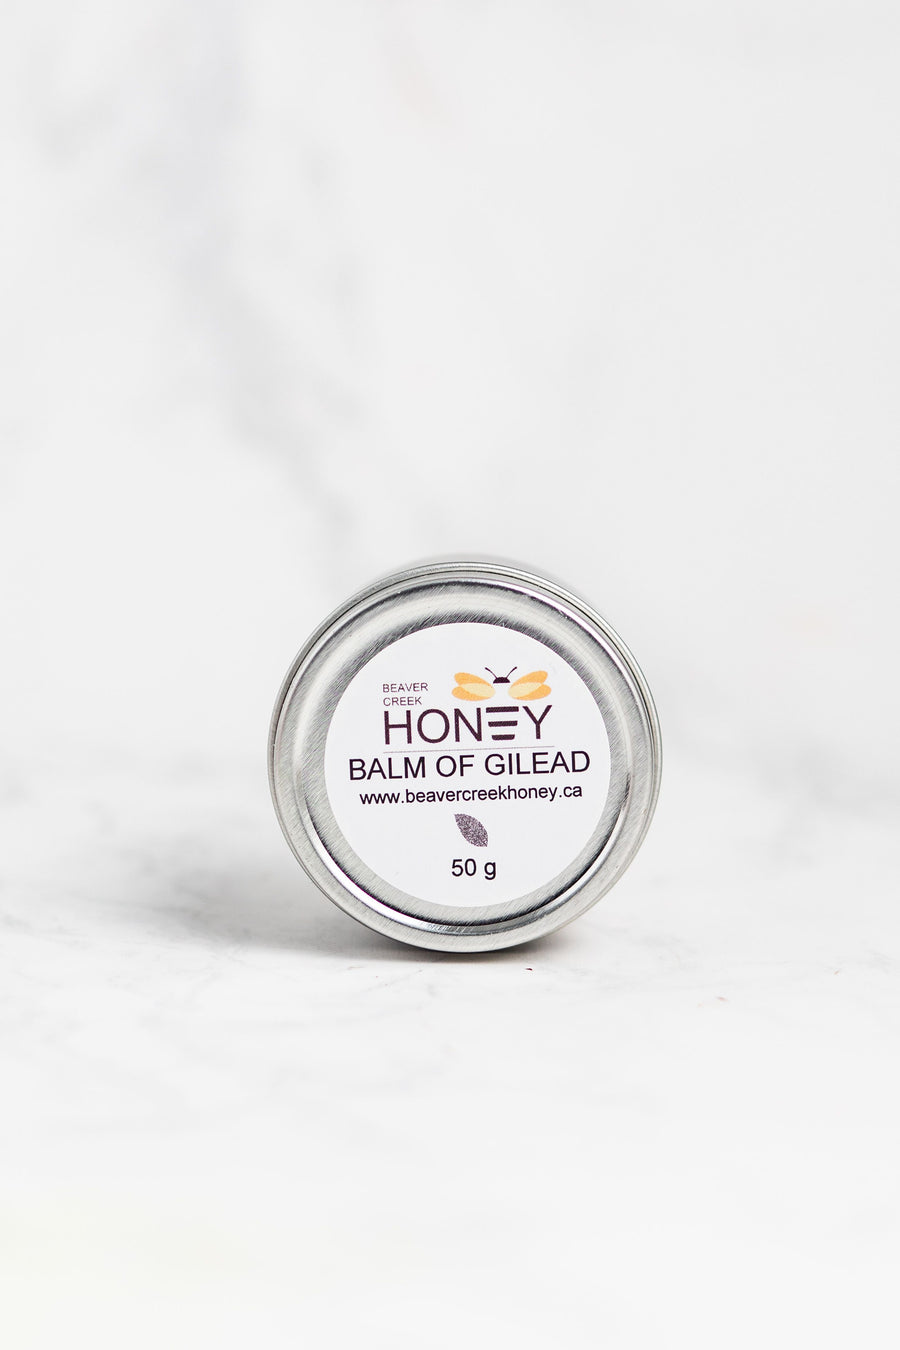 Balm of Gilead  - Beaver Creek Honey